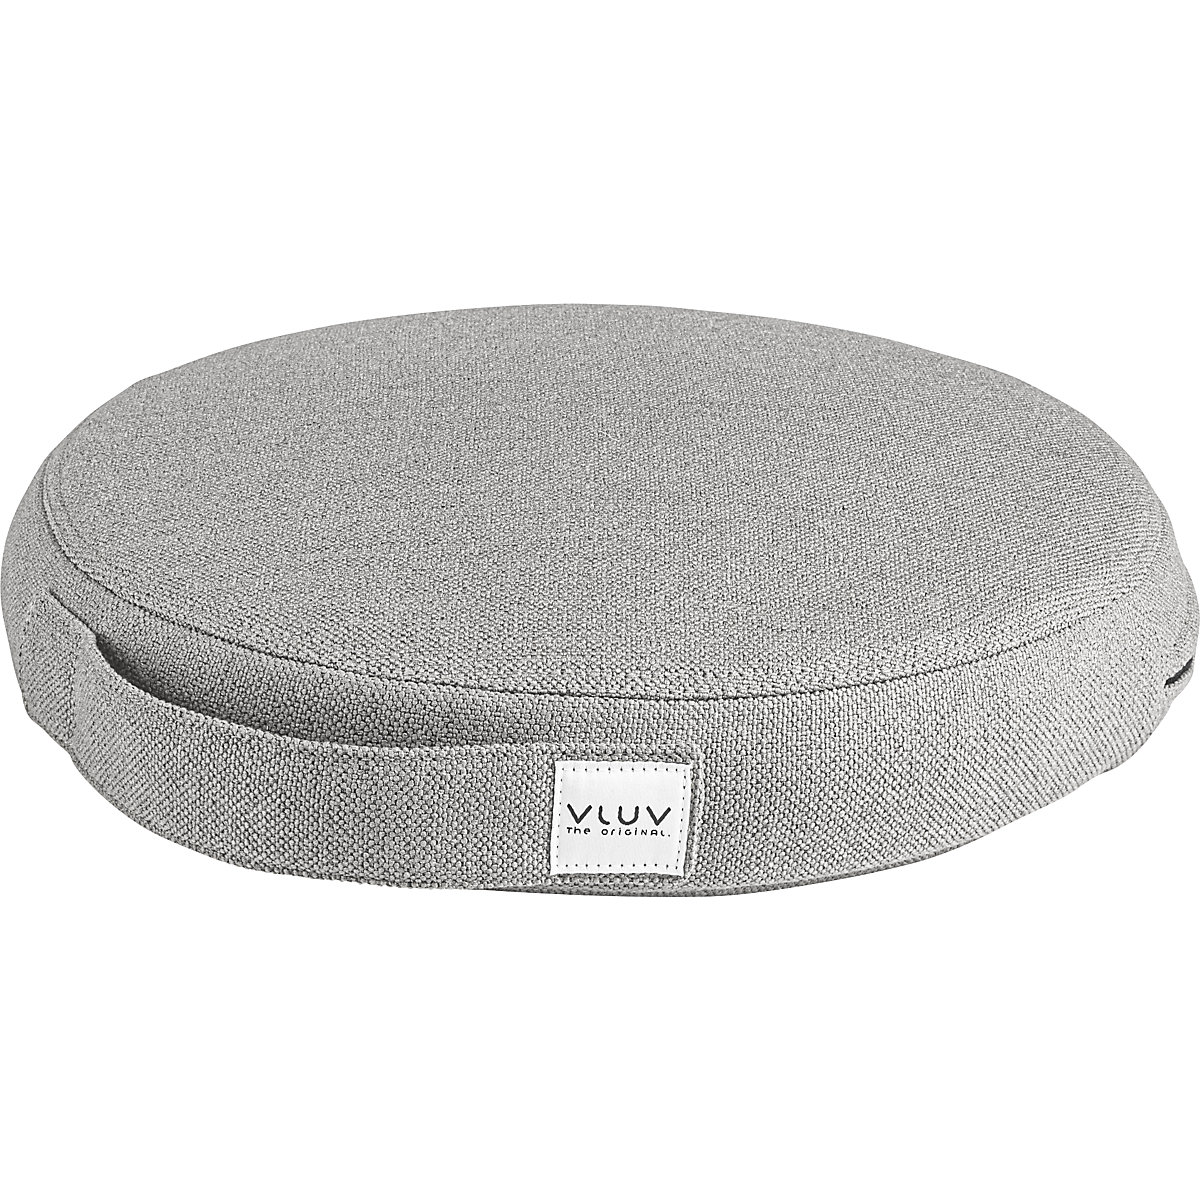 PIL&PED SOVA balance cushion – VLUV, with fabric cover, Ø 360 mm, ash grey